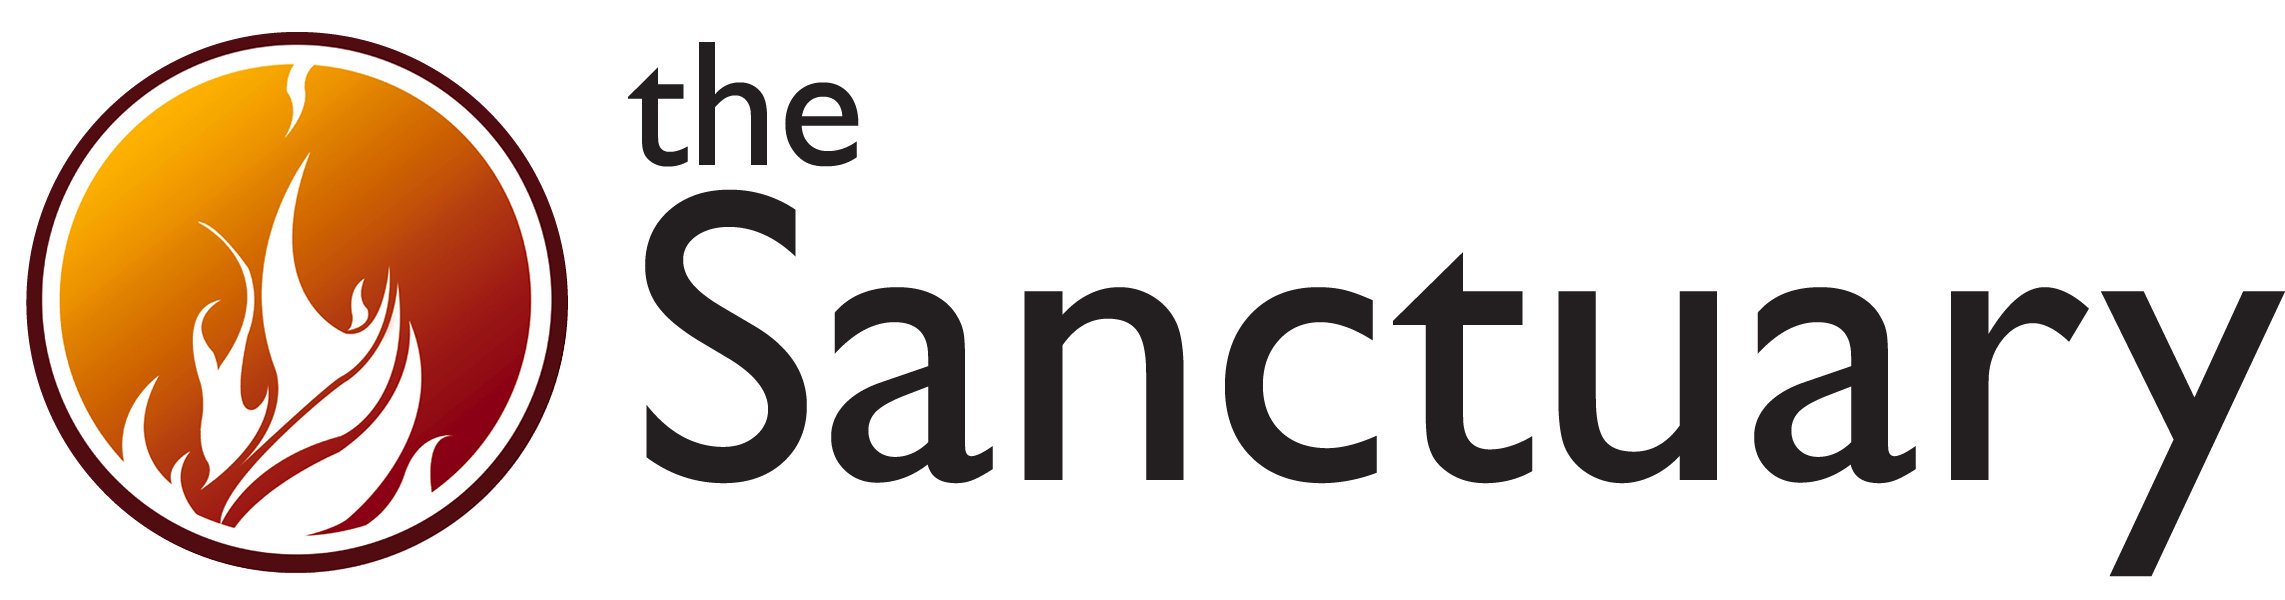 Sanctuary Logo - The Sanctuary – The Father's House Shaftesbury